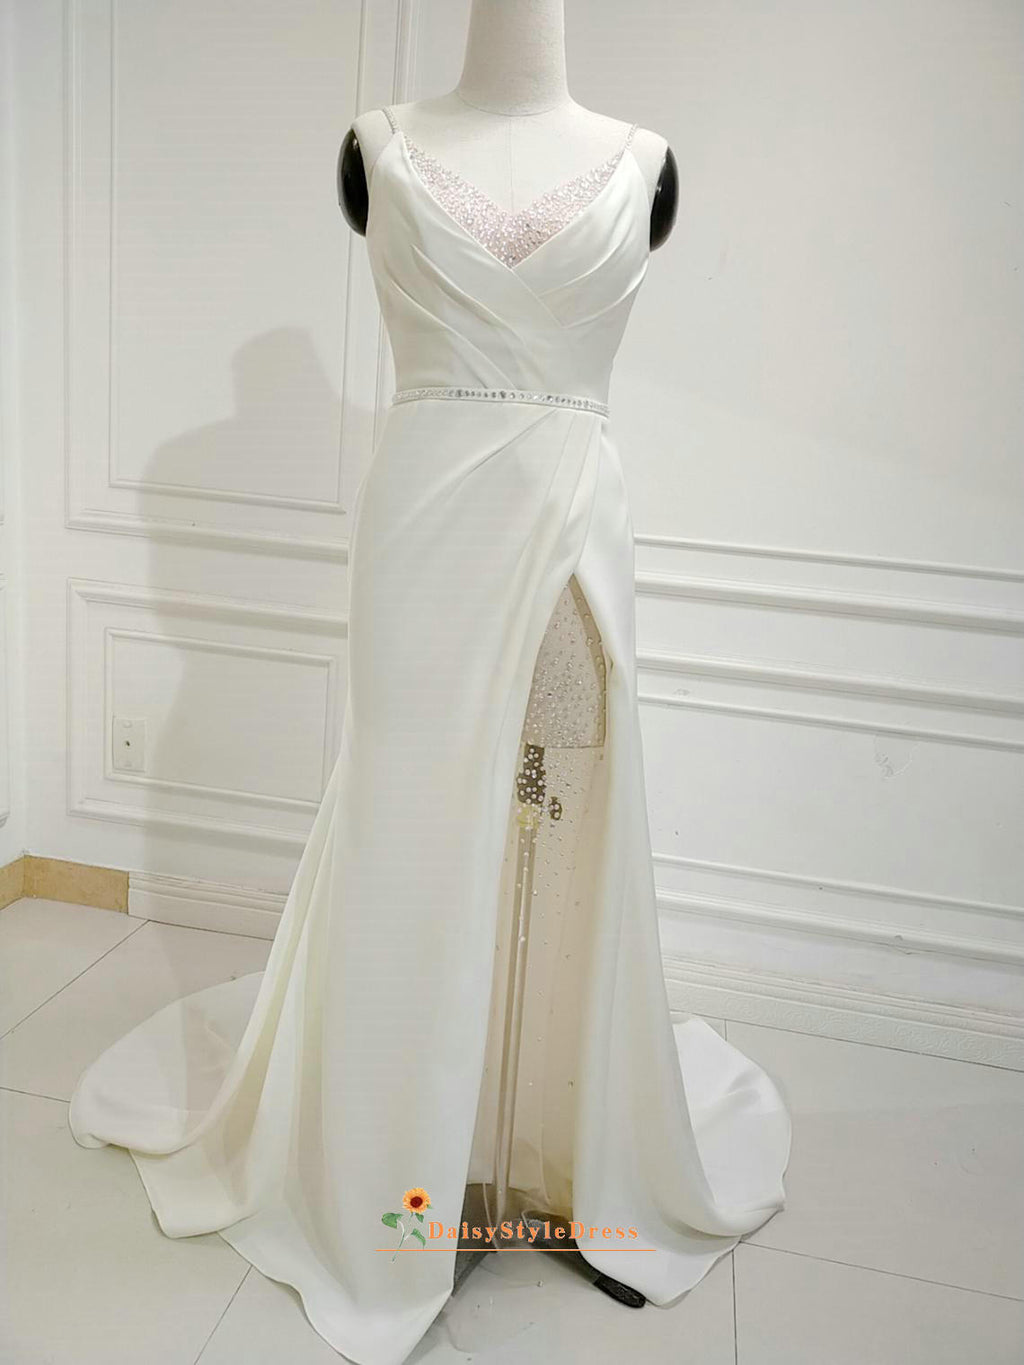 Slit wedding dress